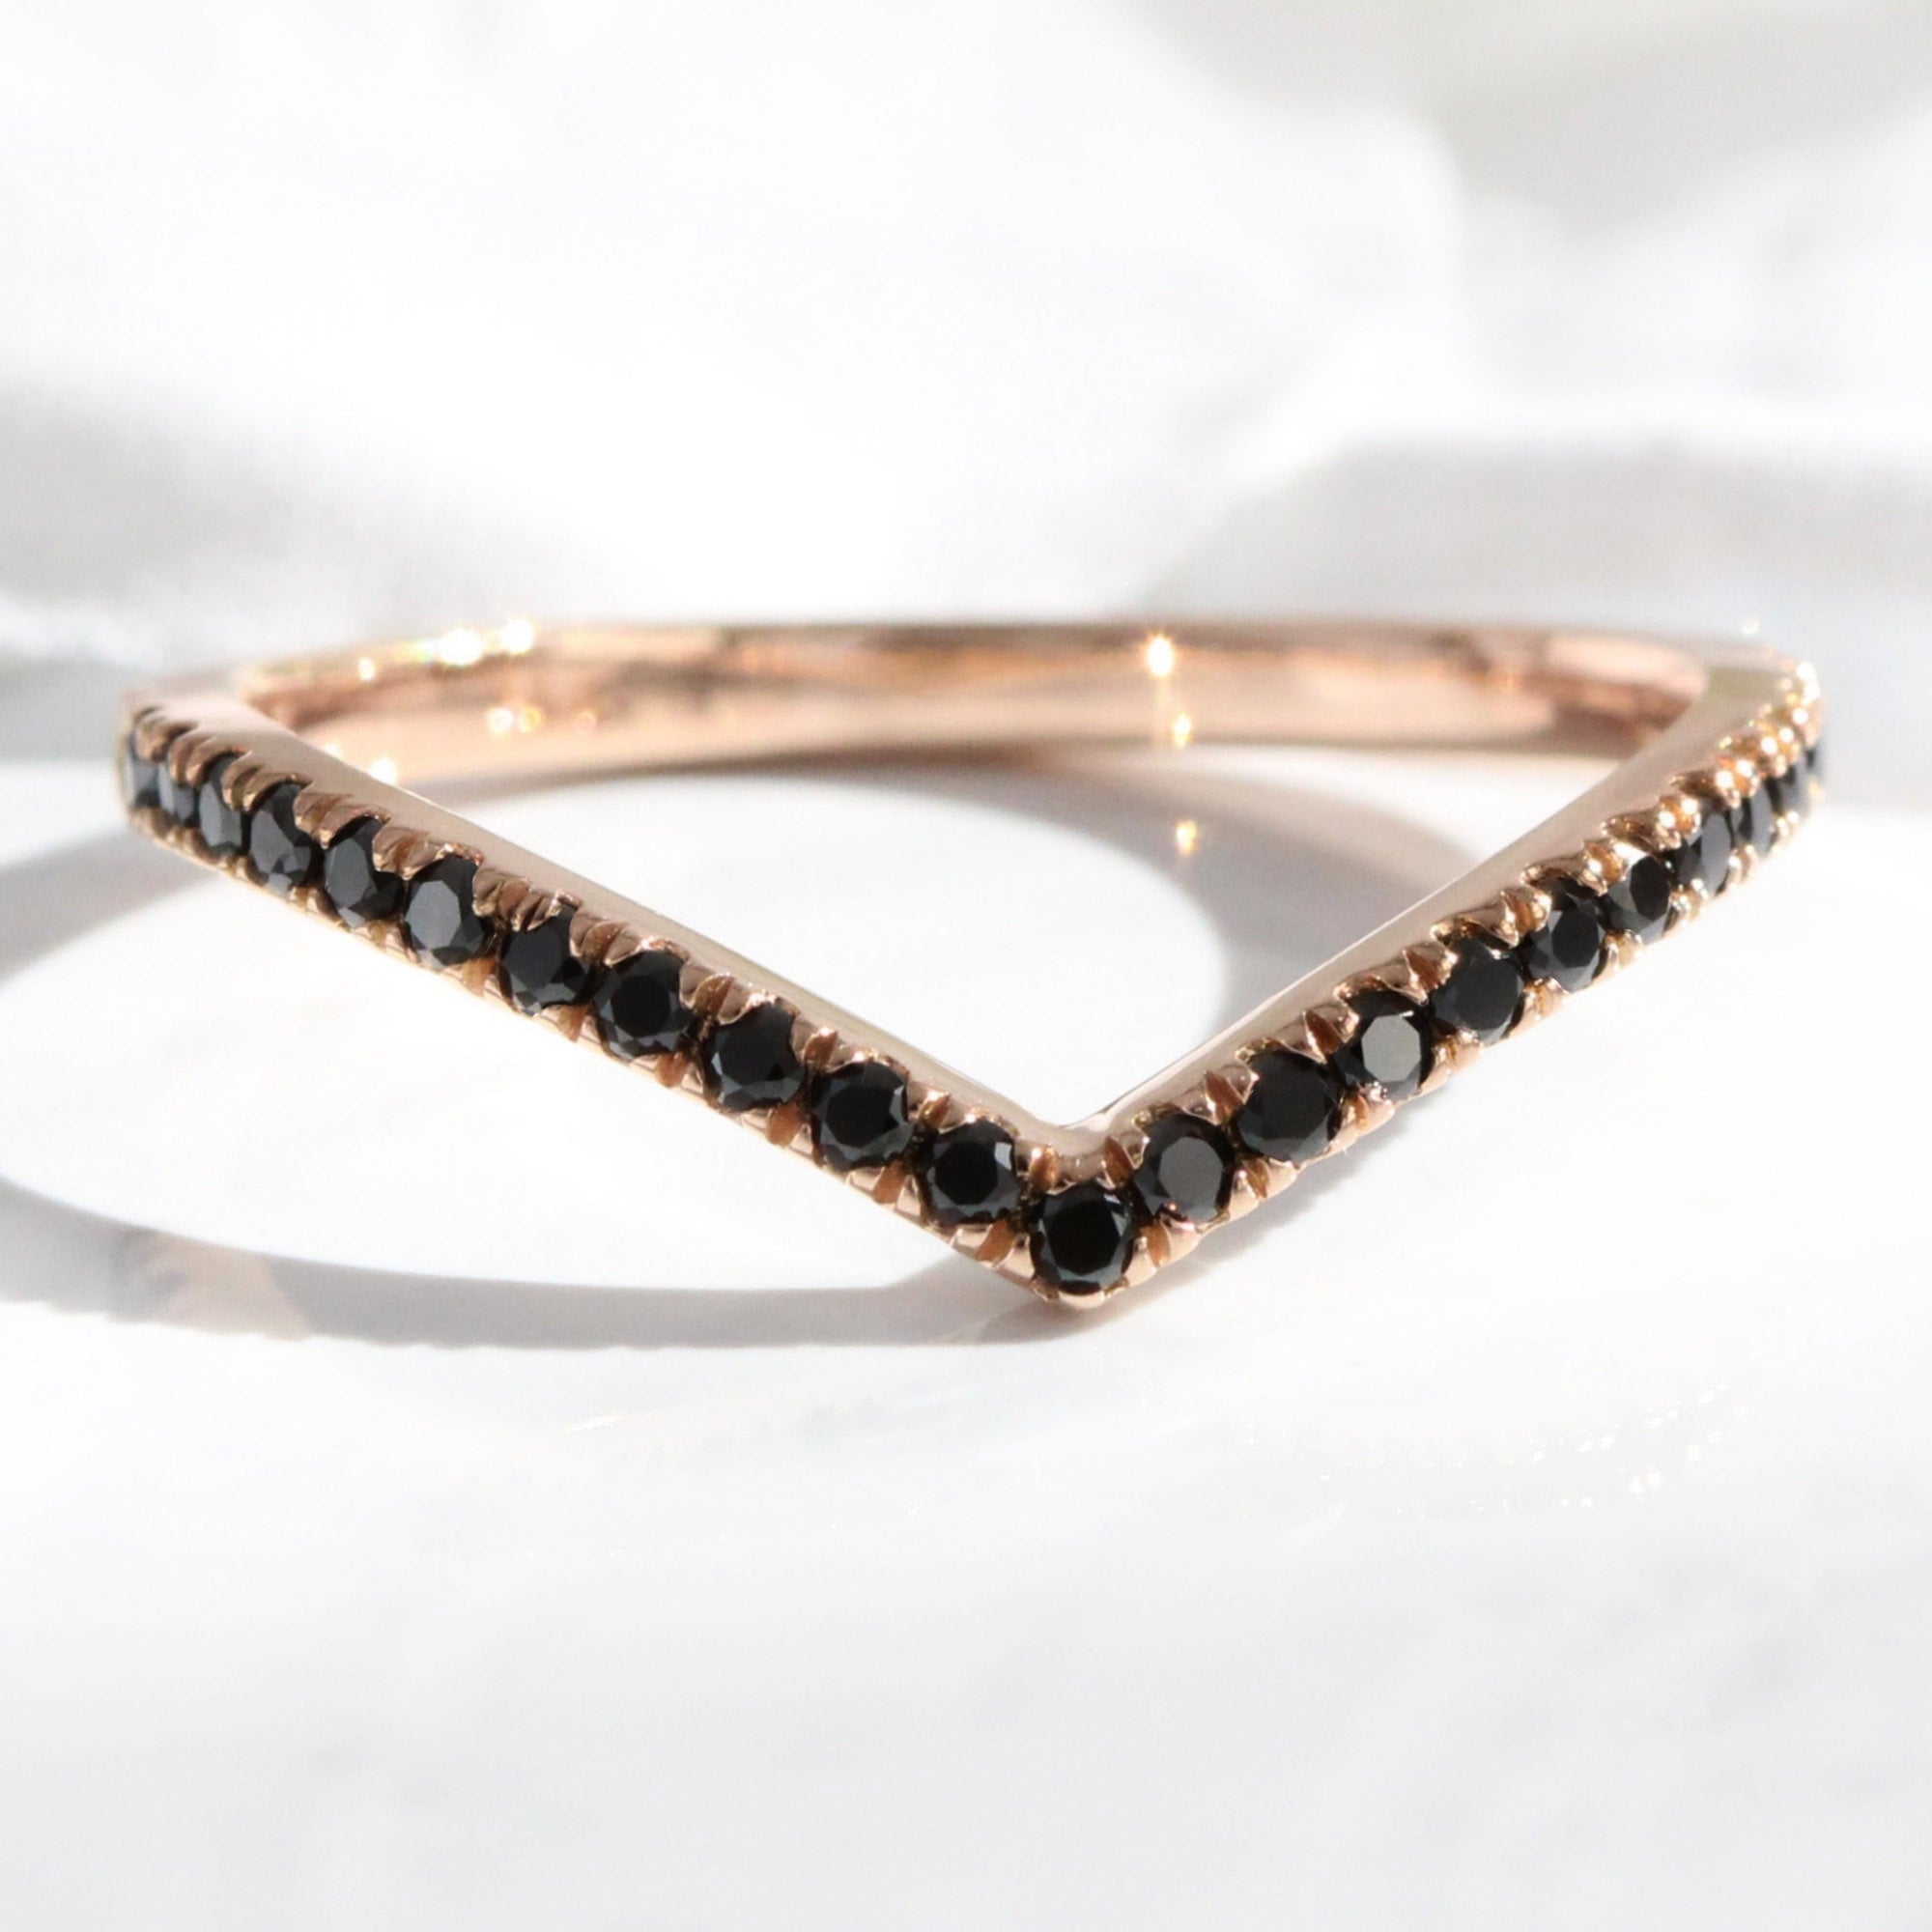 Chevron Black Diamond Wedding Ring Rose Gold V Shaped Curved Pave Band La More Design Jewelry